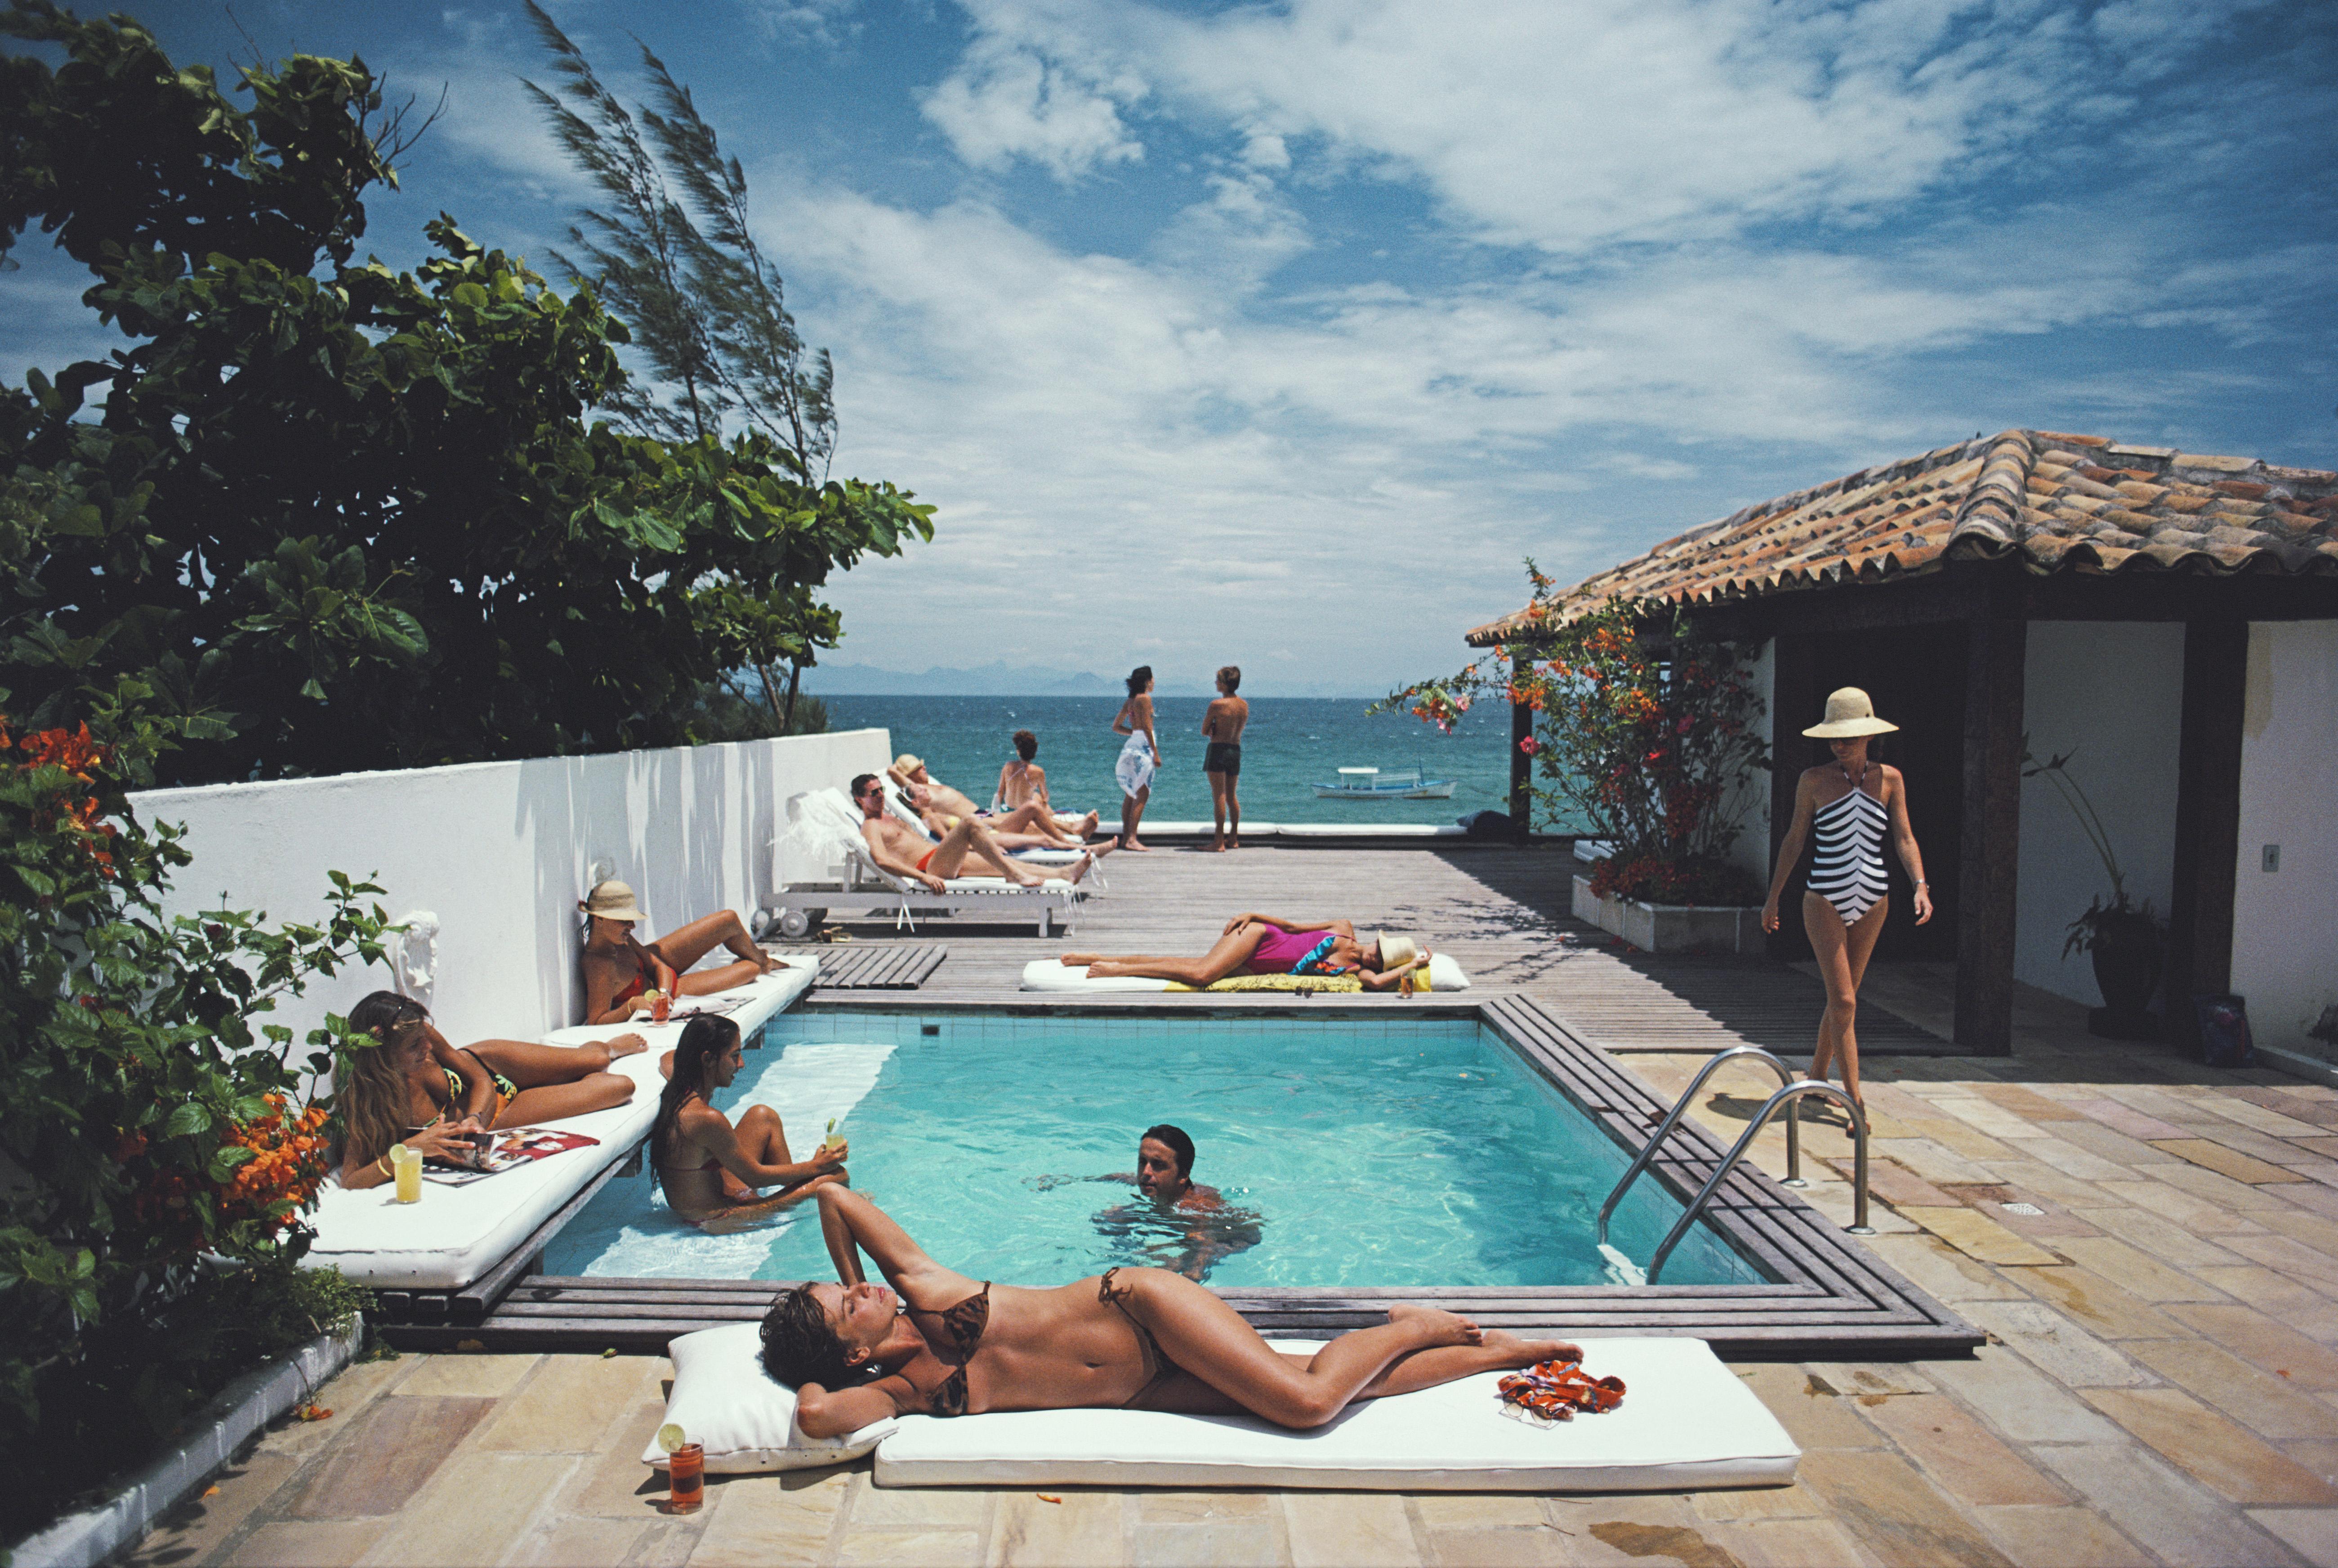 Slim Aarons Color Photograph - Armacao dos Buzios, Brazil, Estate Edition Photograph (Sunbathers, Ocean, Pool)